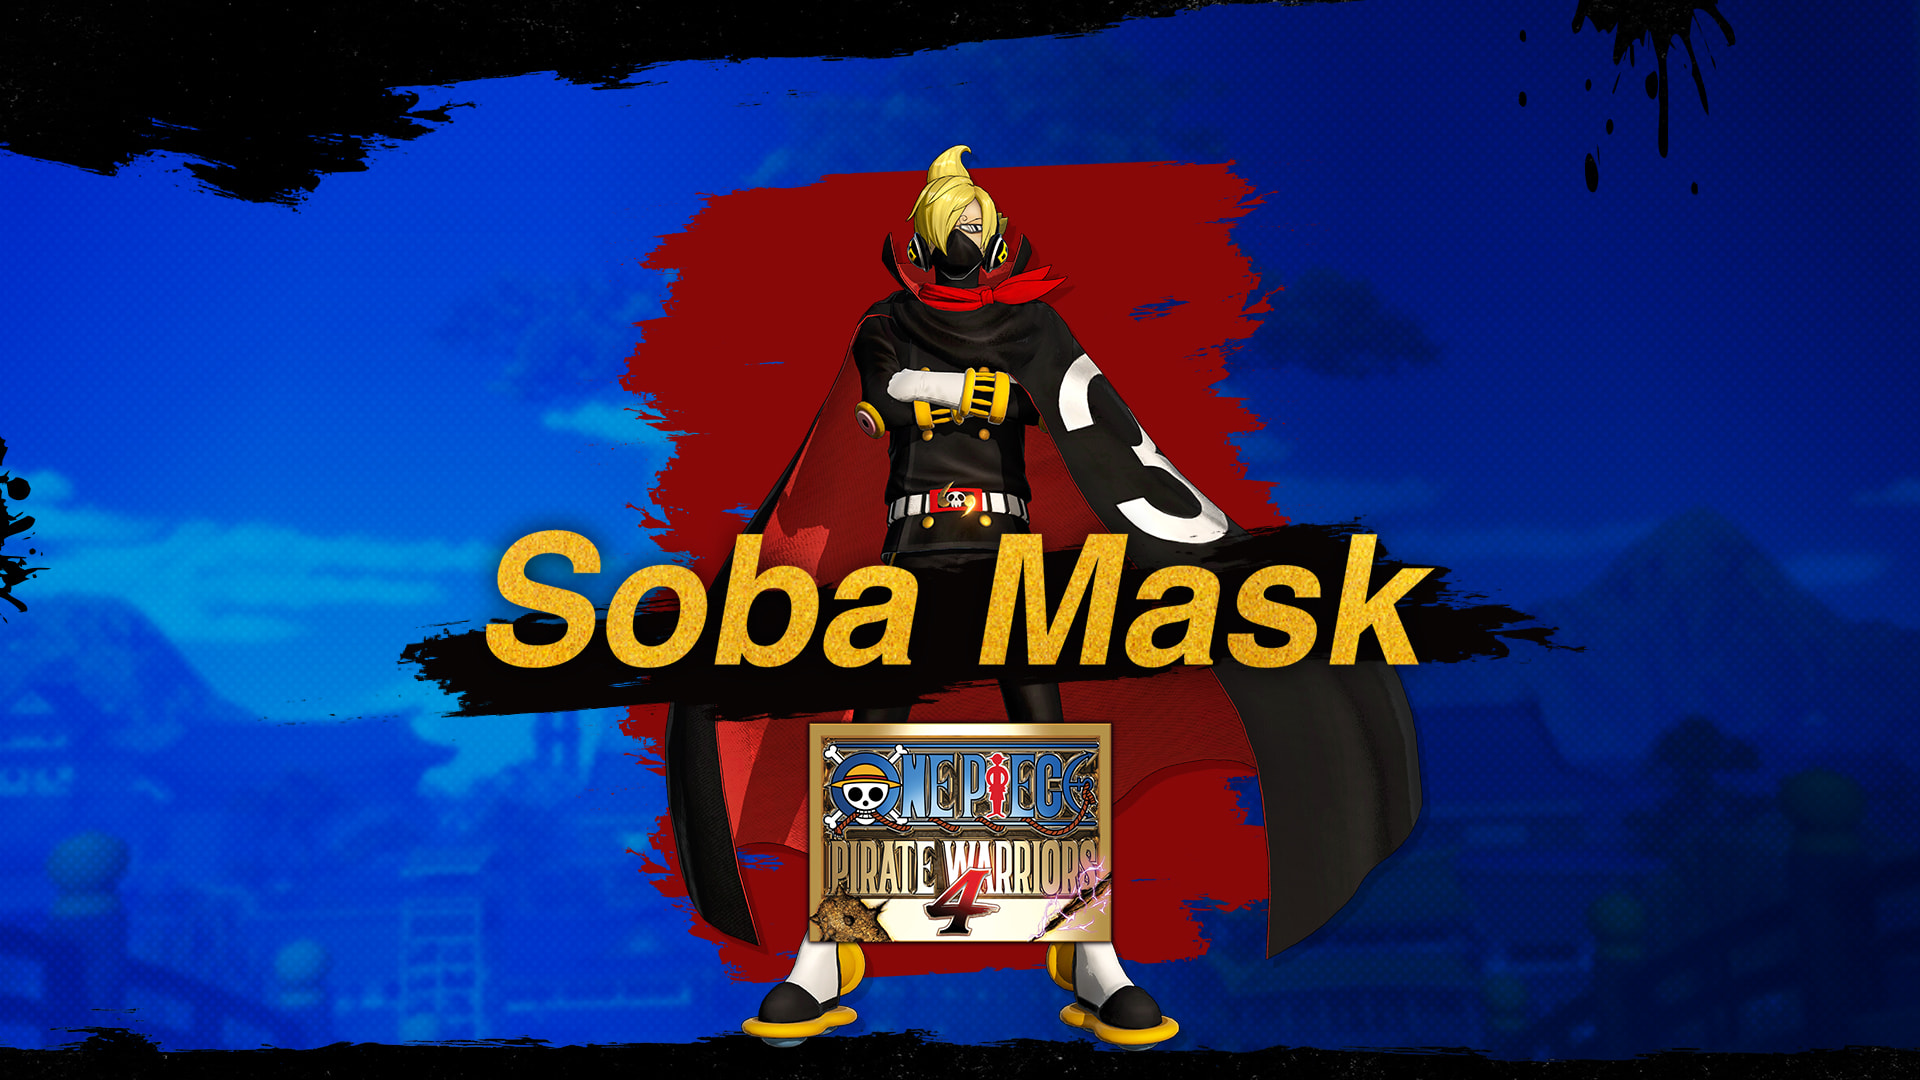 ONE PIECE: PIRATE WARRIORS 4 Sanji Costume "Soba Mask"